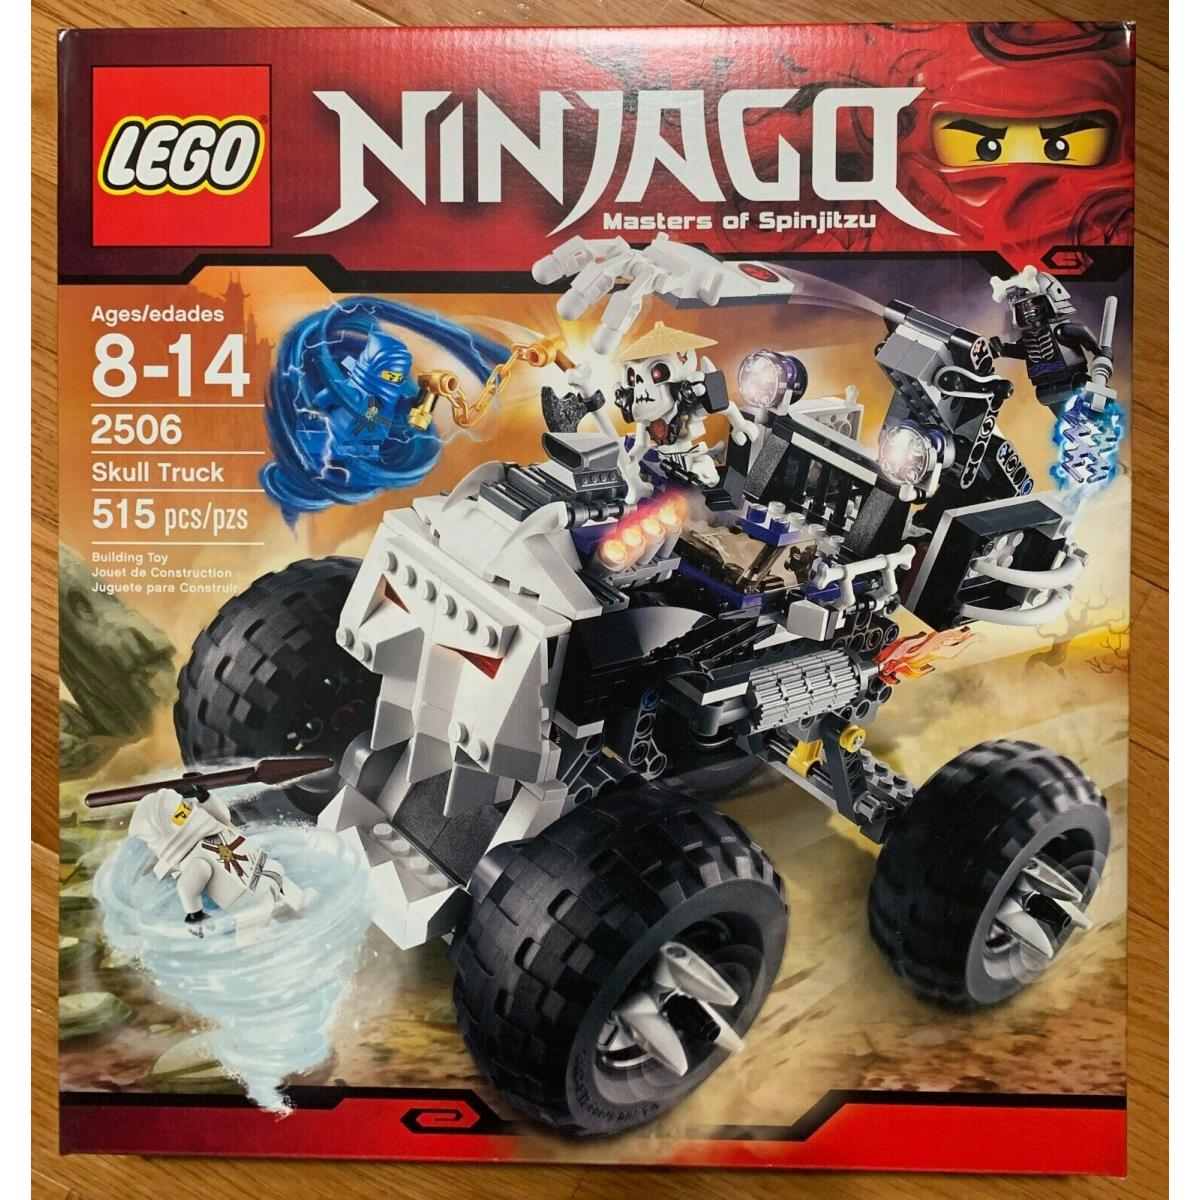 Lego 2506 Ninjago: Skull Truck Retired Hard to Find Building Brand Set